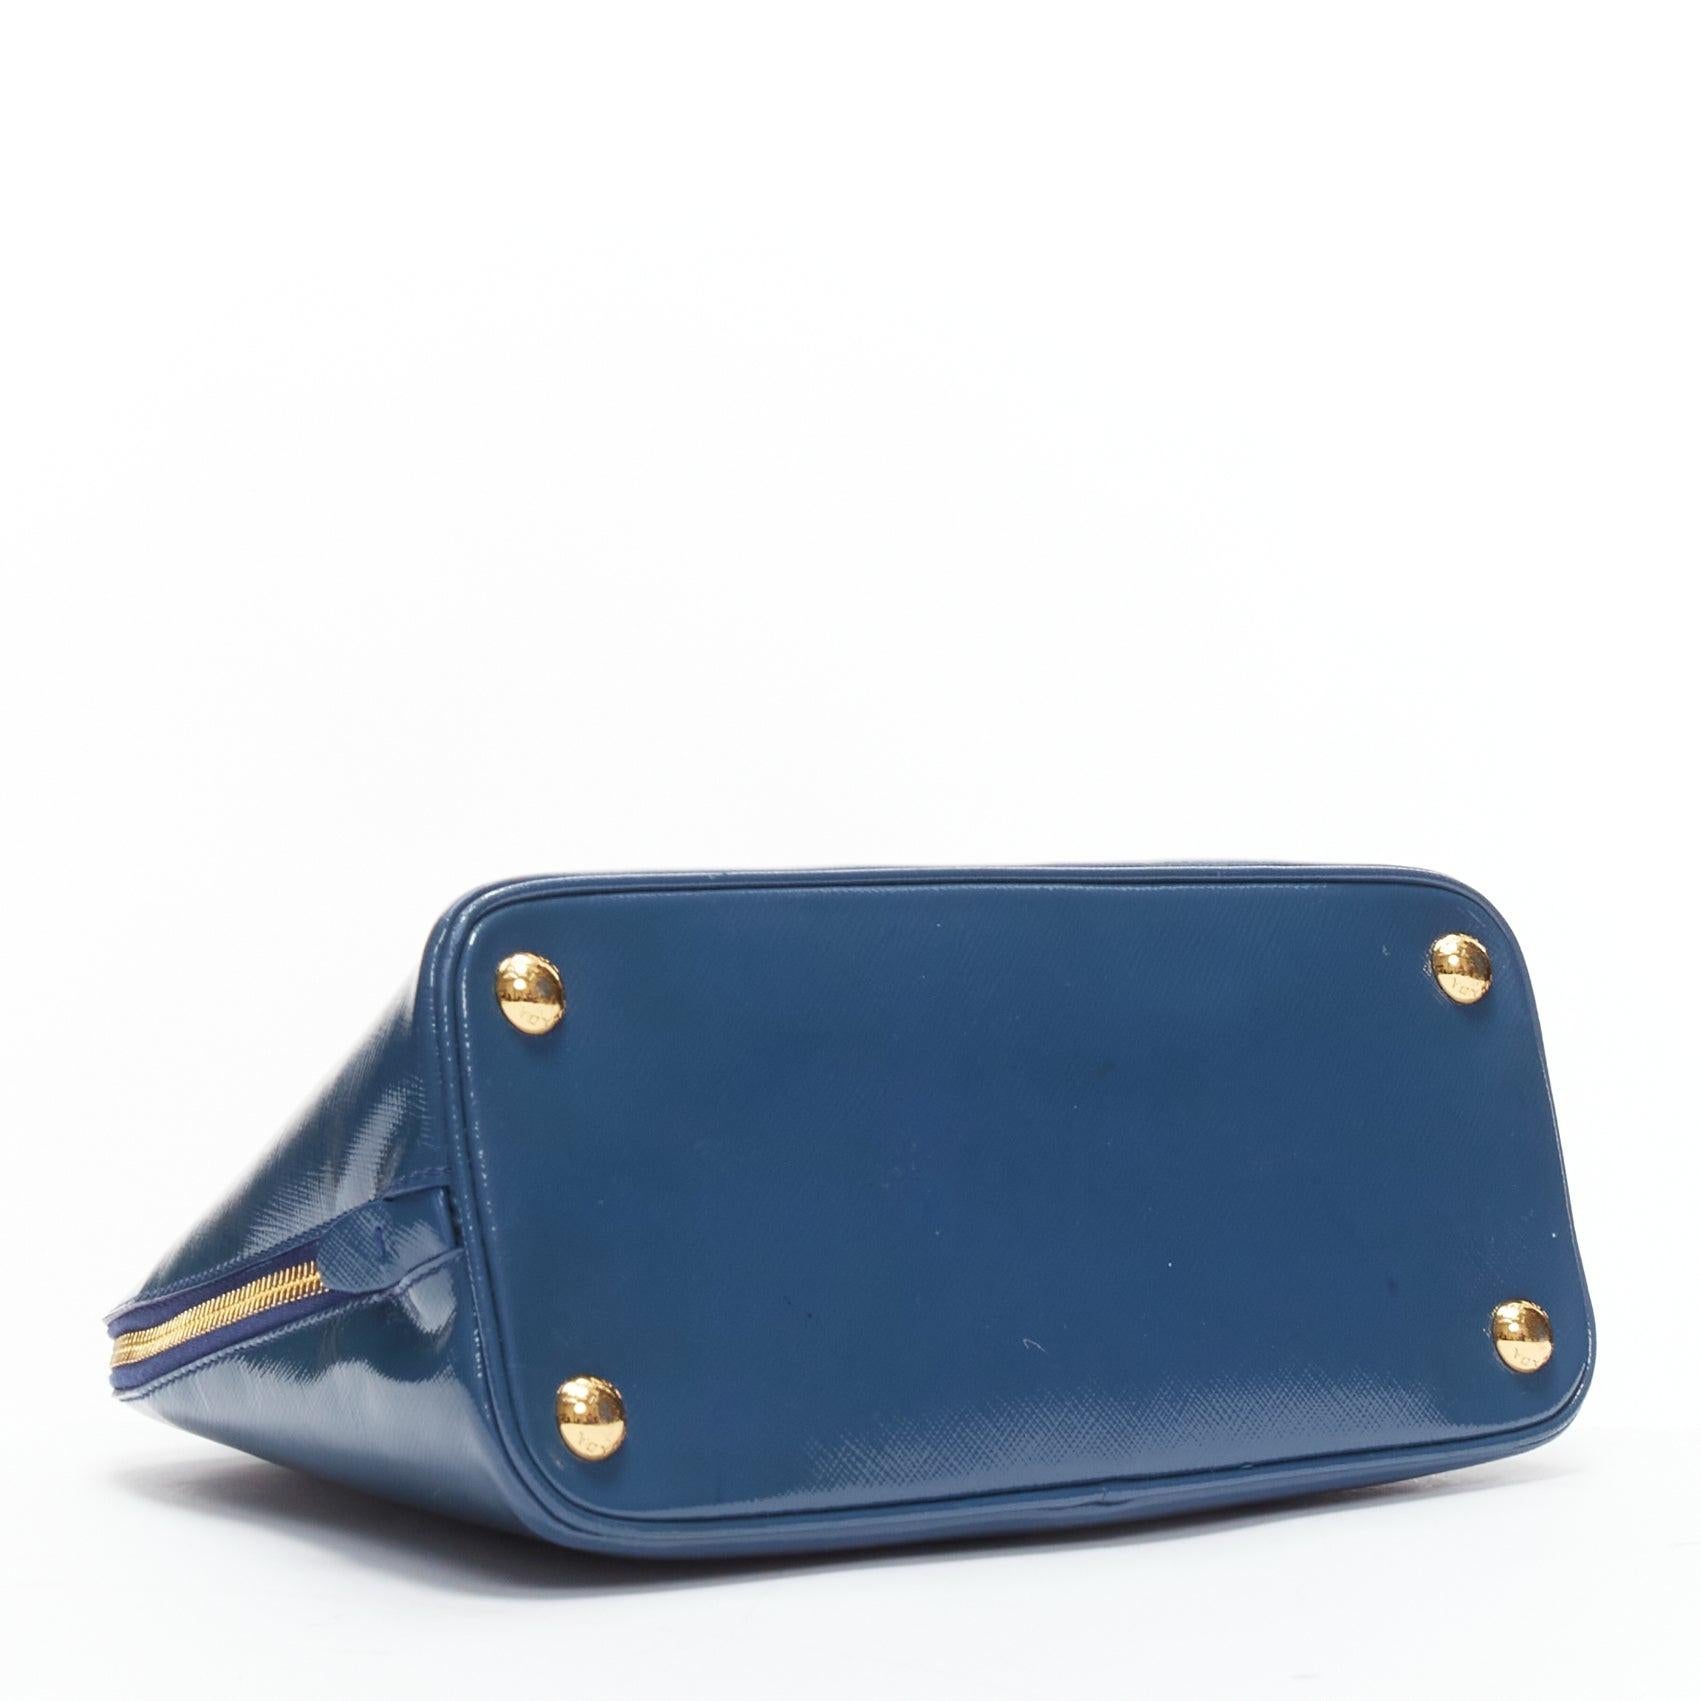 PRADA Promenade Vernice Saffiano blue leather triangle logo top handle tote bag For Sale 1